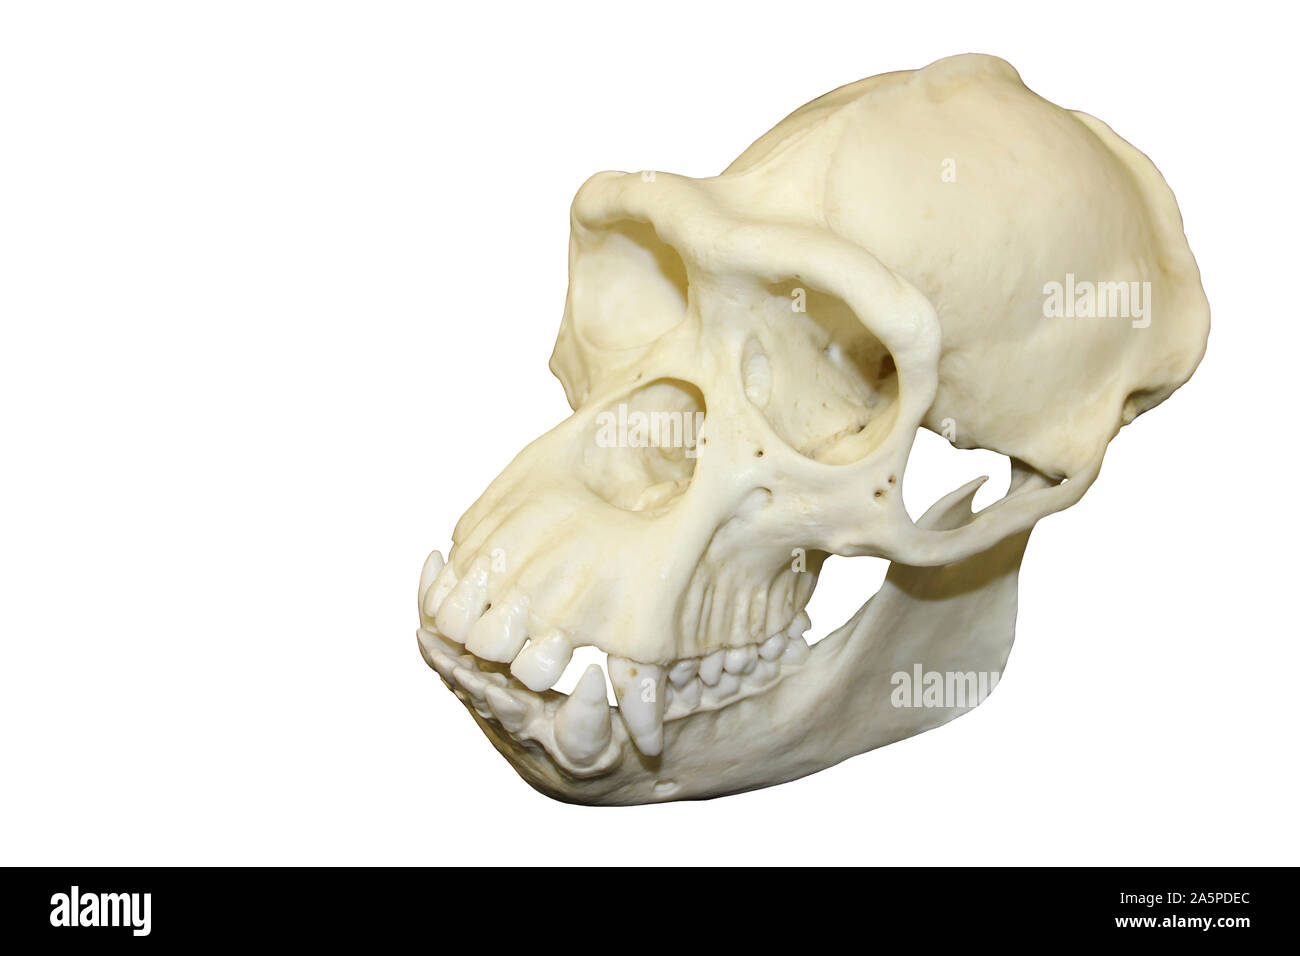 Male Chimpanzee Skull Stock Photo